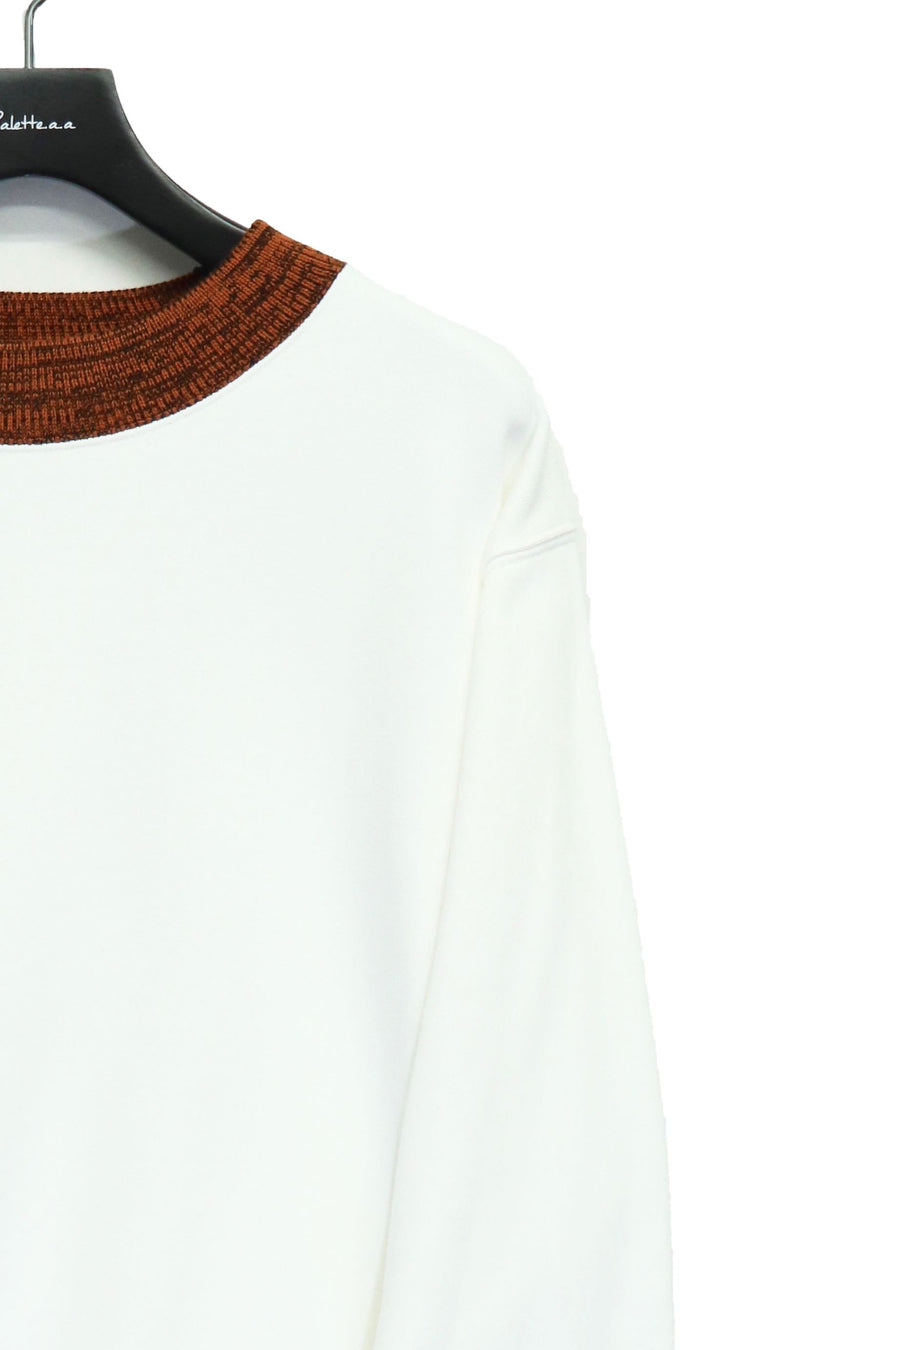 TOGA VIRILIS  Knit rib sweatshirt(WHITE)